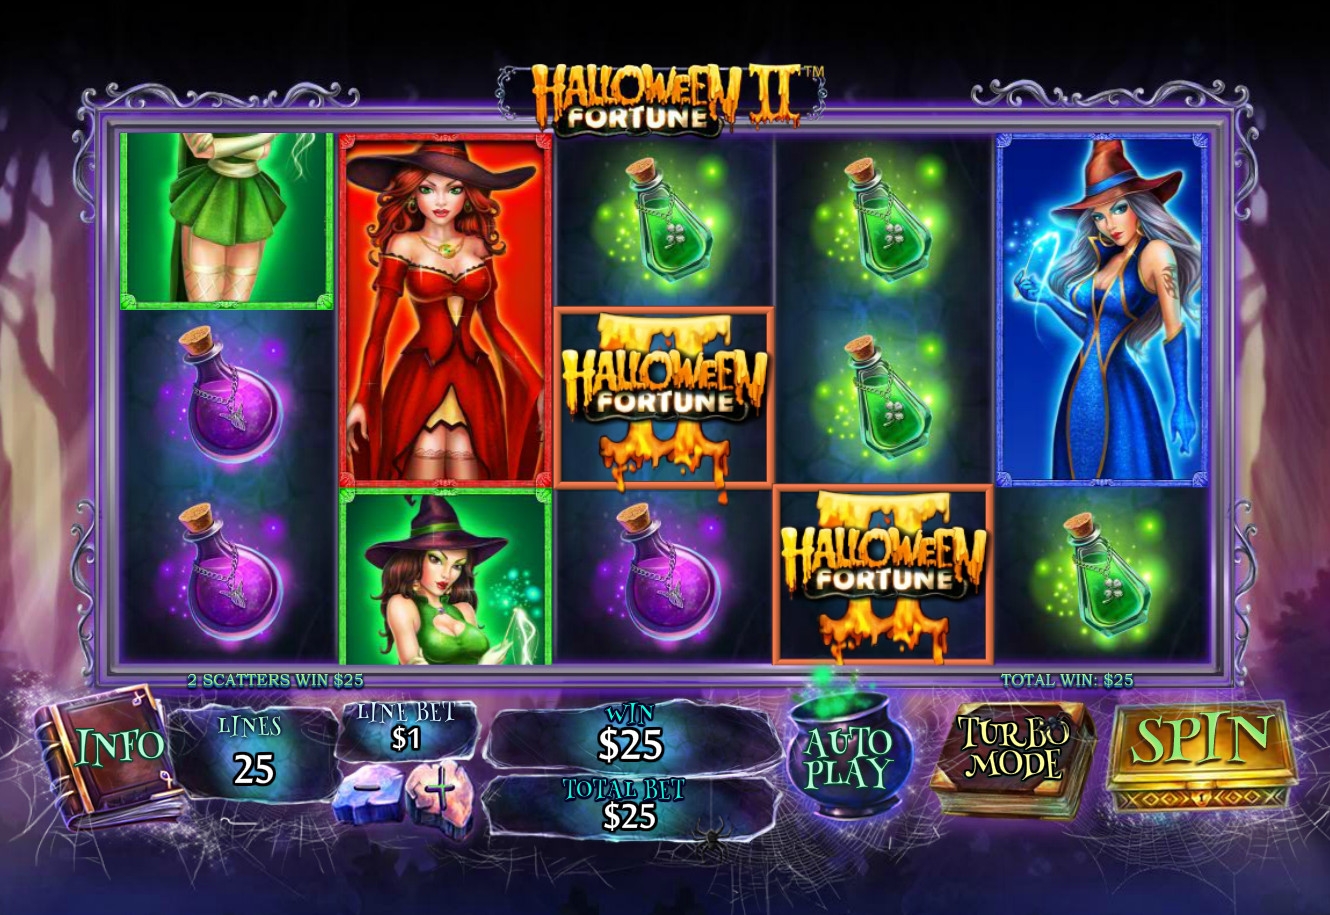 Halloween Fortune II (Halloween Fortune II) from category Slots